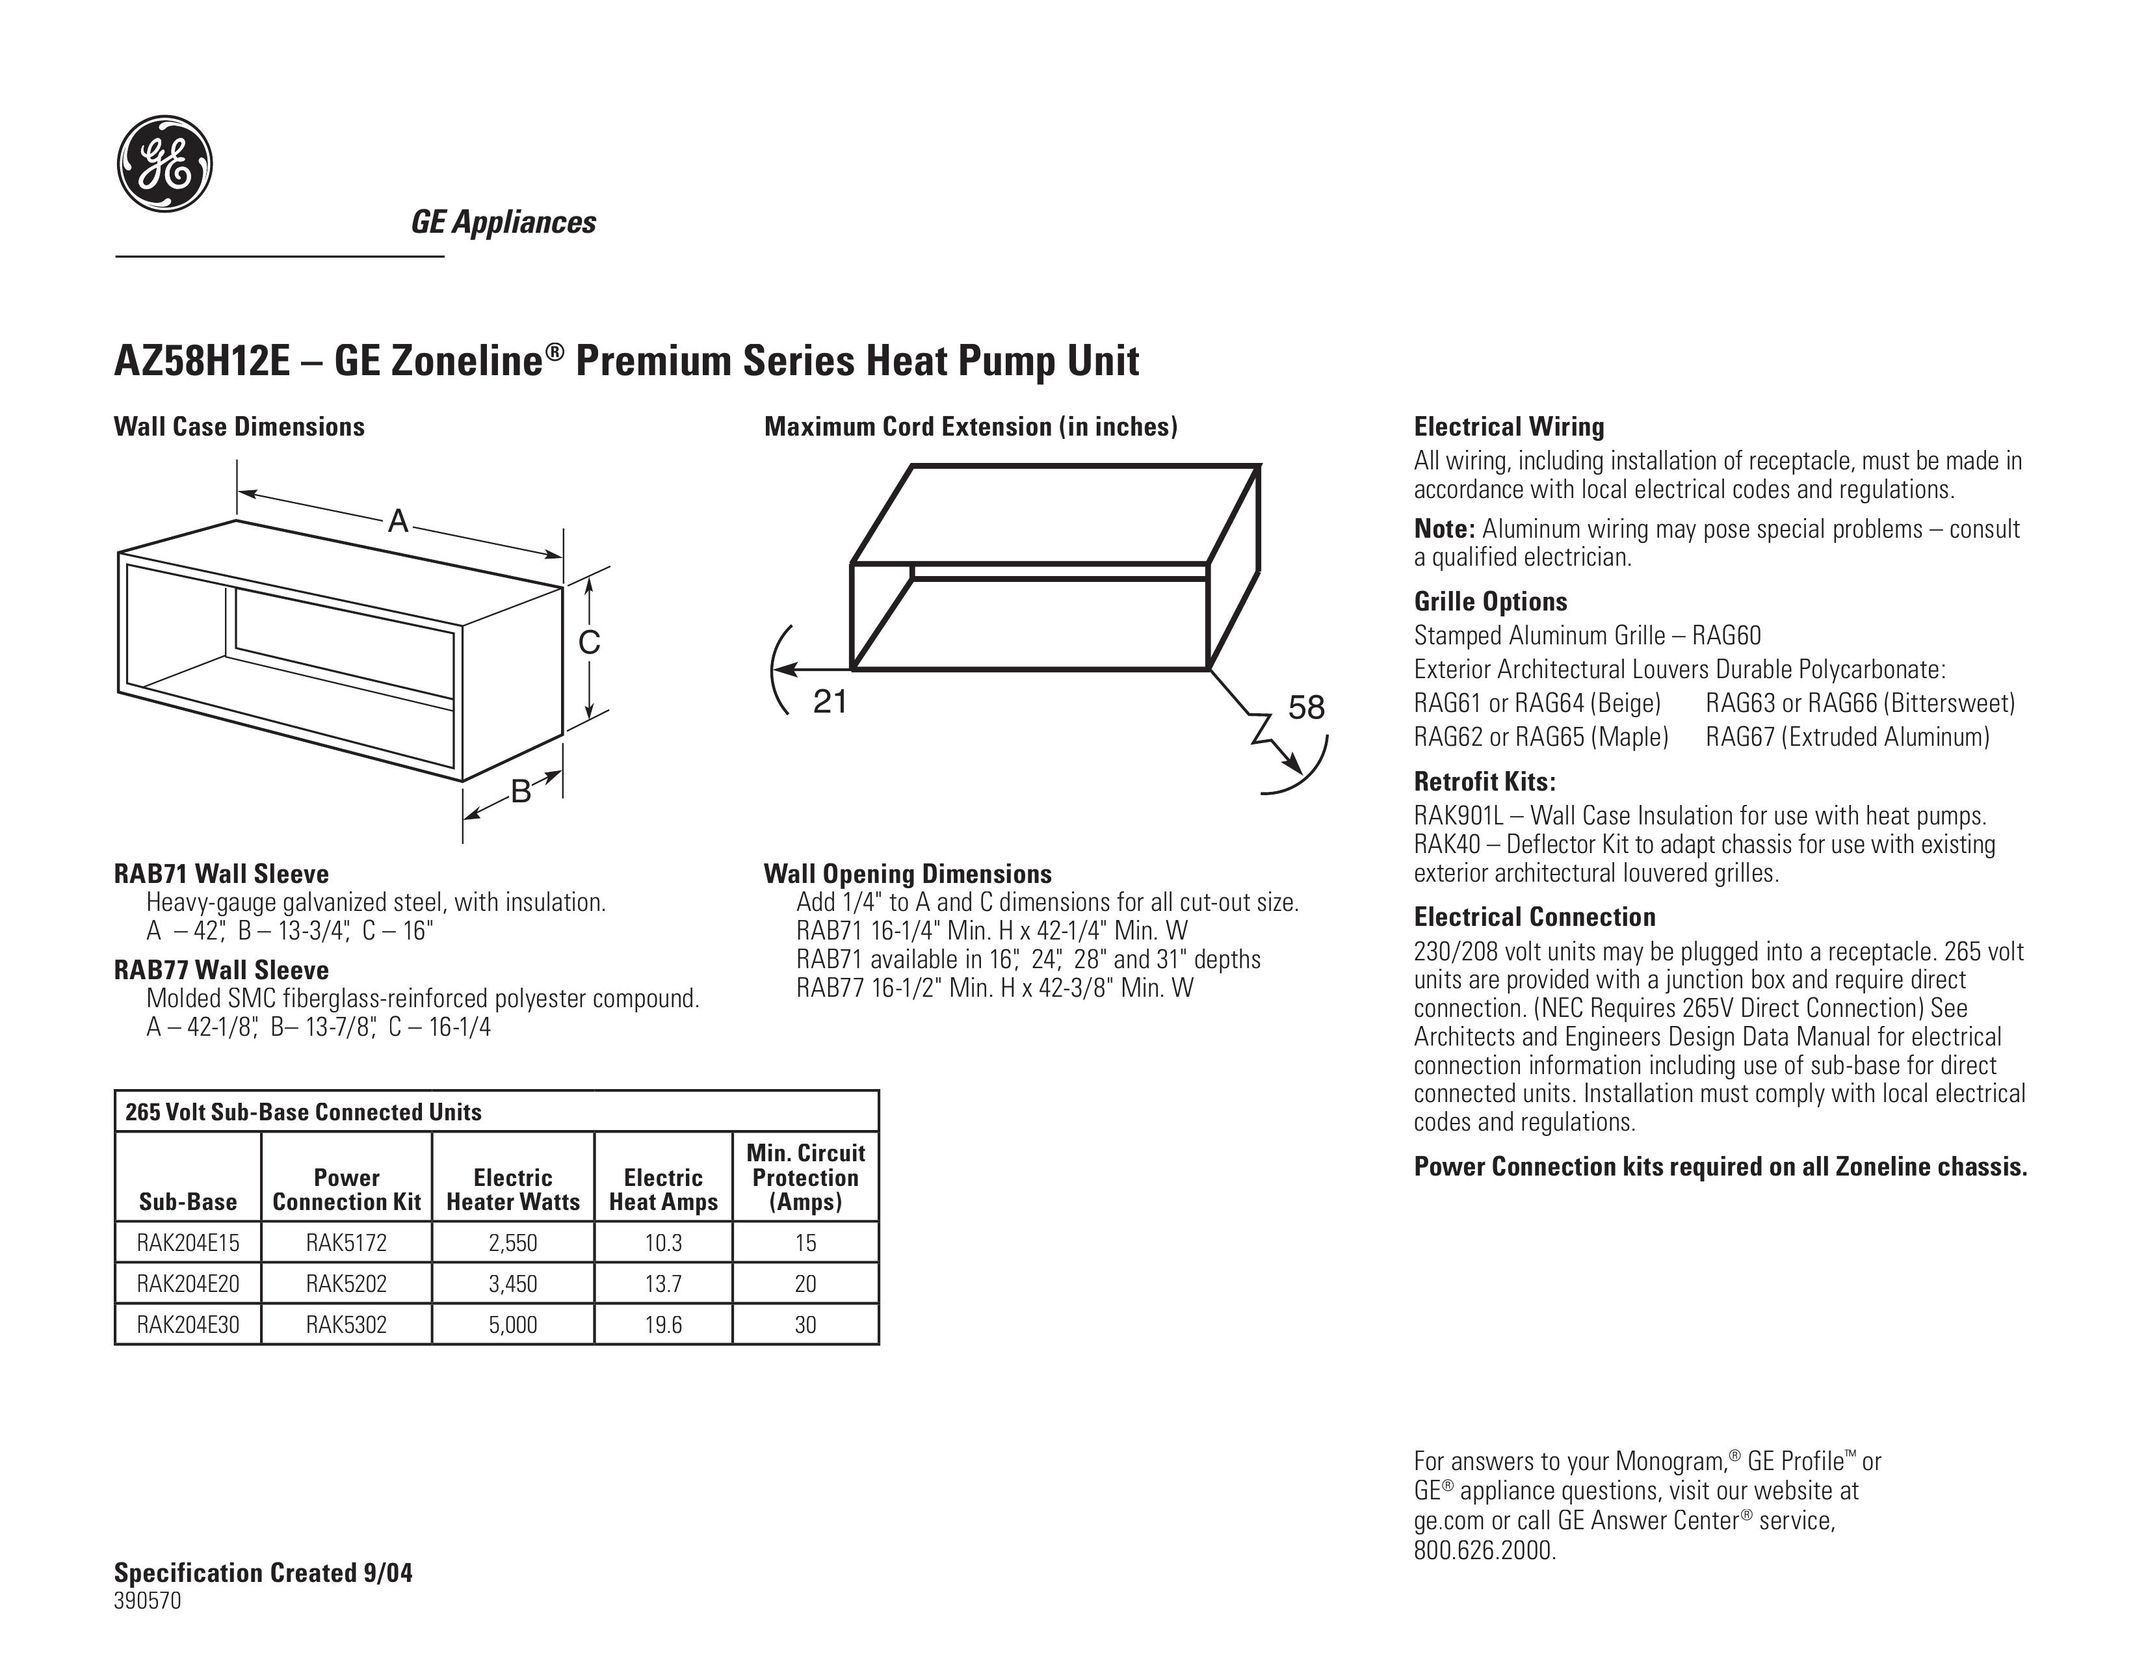 GE AZ58H12E Heat Pump User Manual